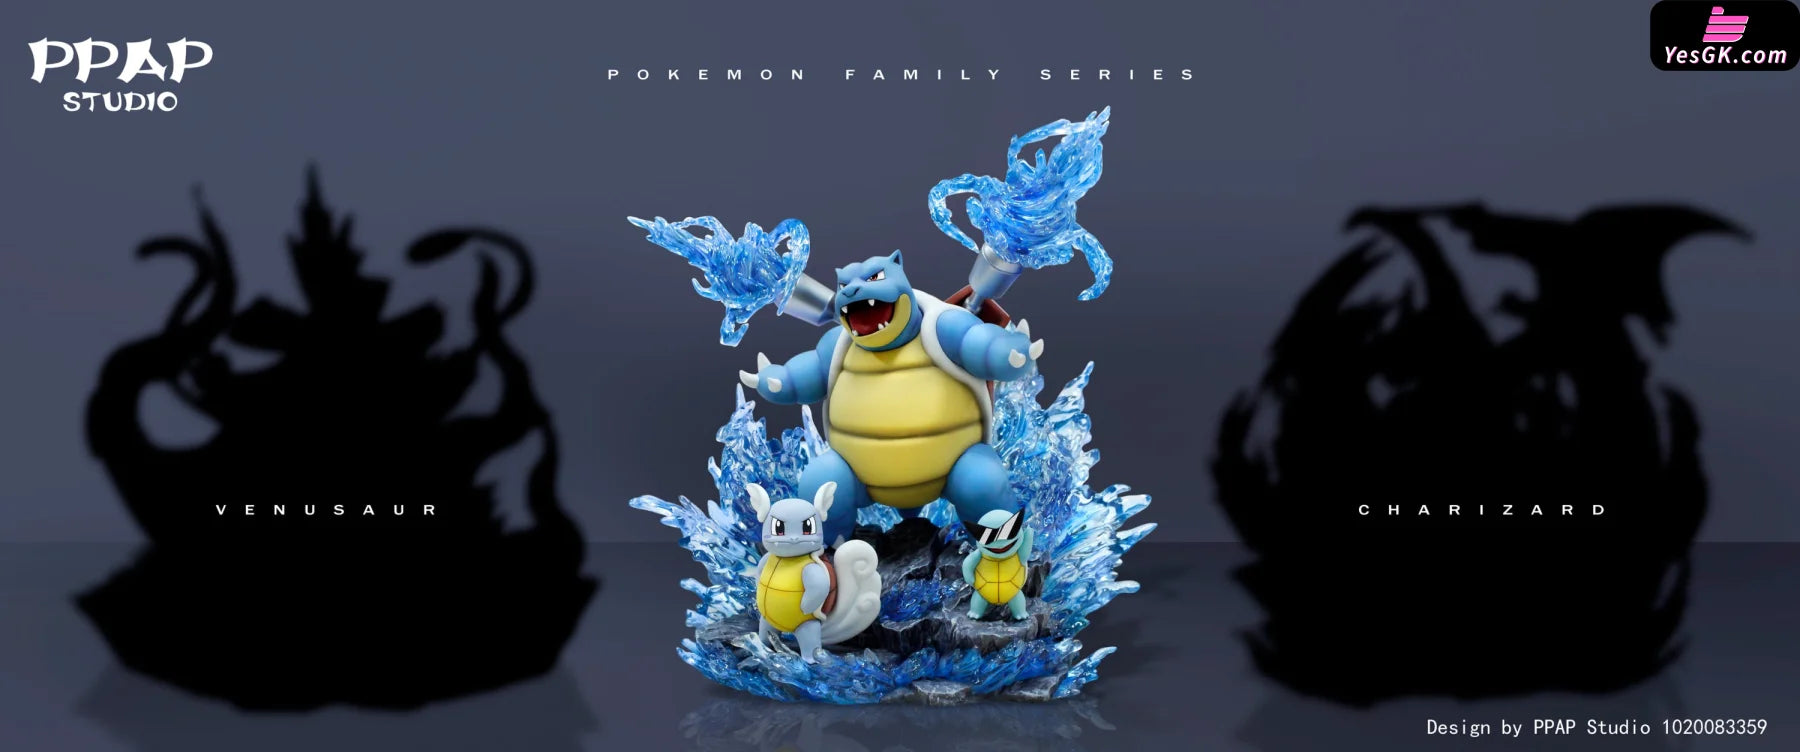 Pokemon - Blastoise Family Resin Statue Ppap Studio [In Stock]